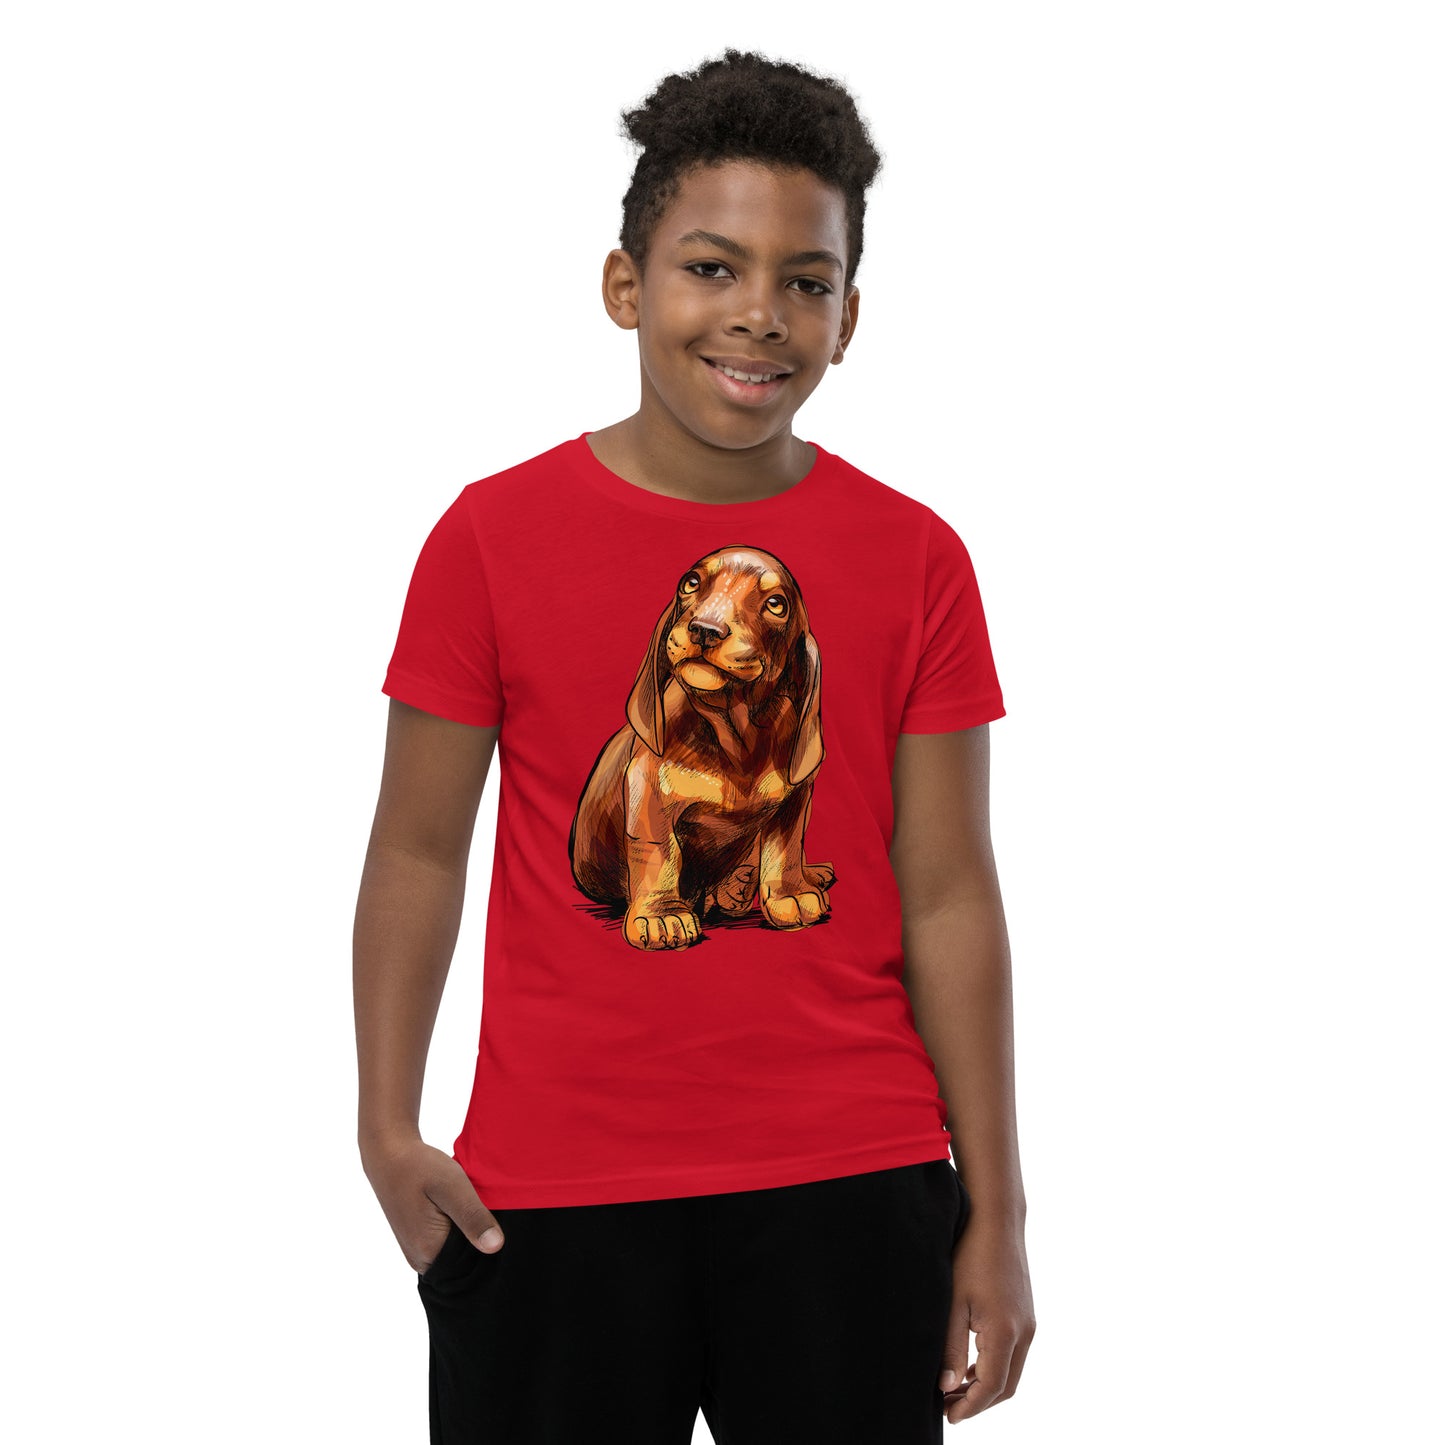 Cute Dachshund Puppy Dog T-shirt, No. 0591